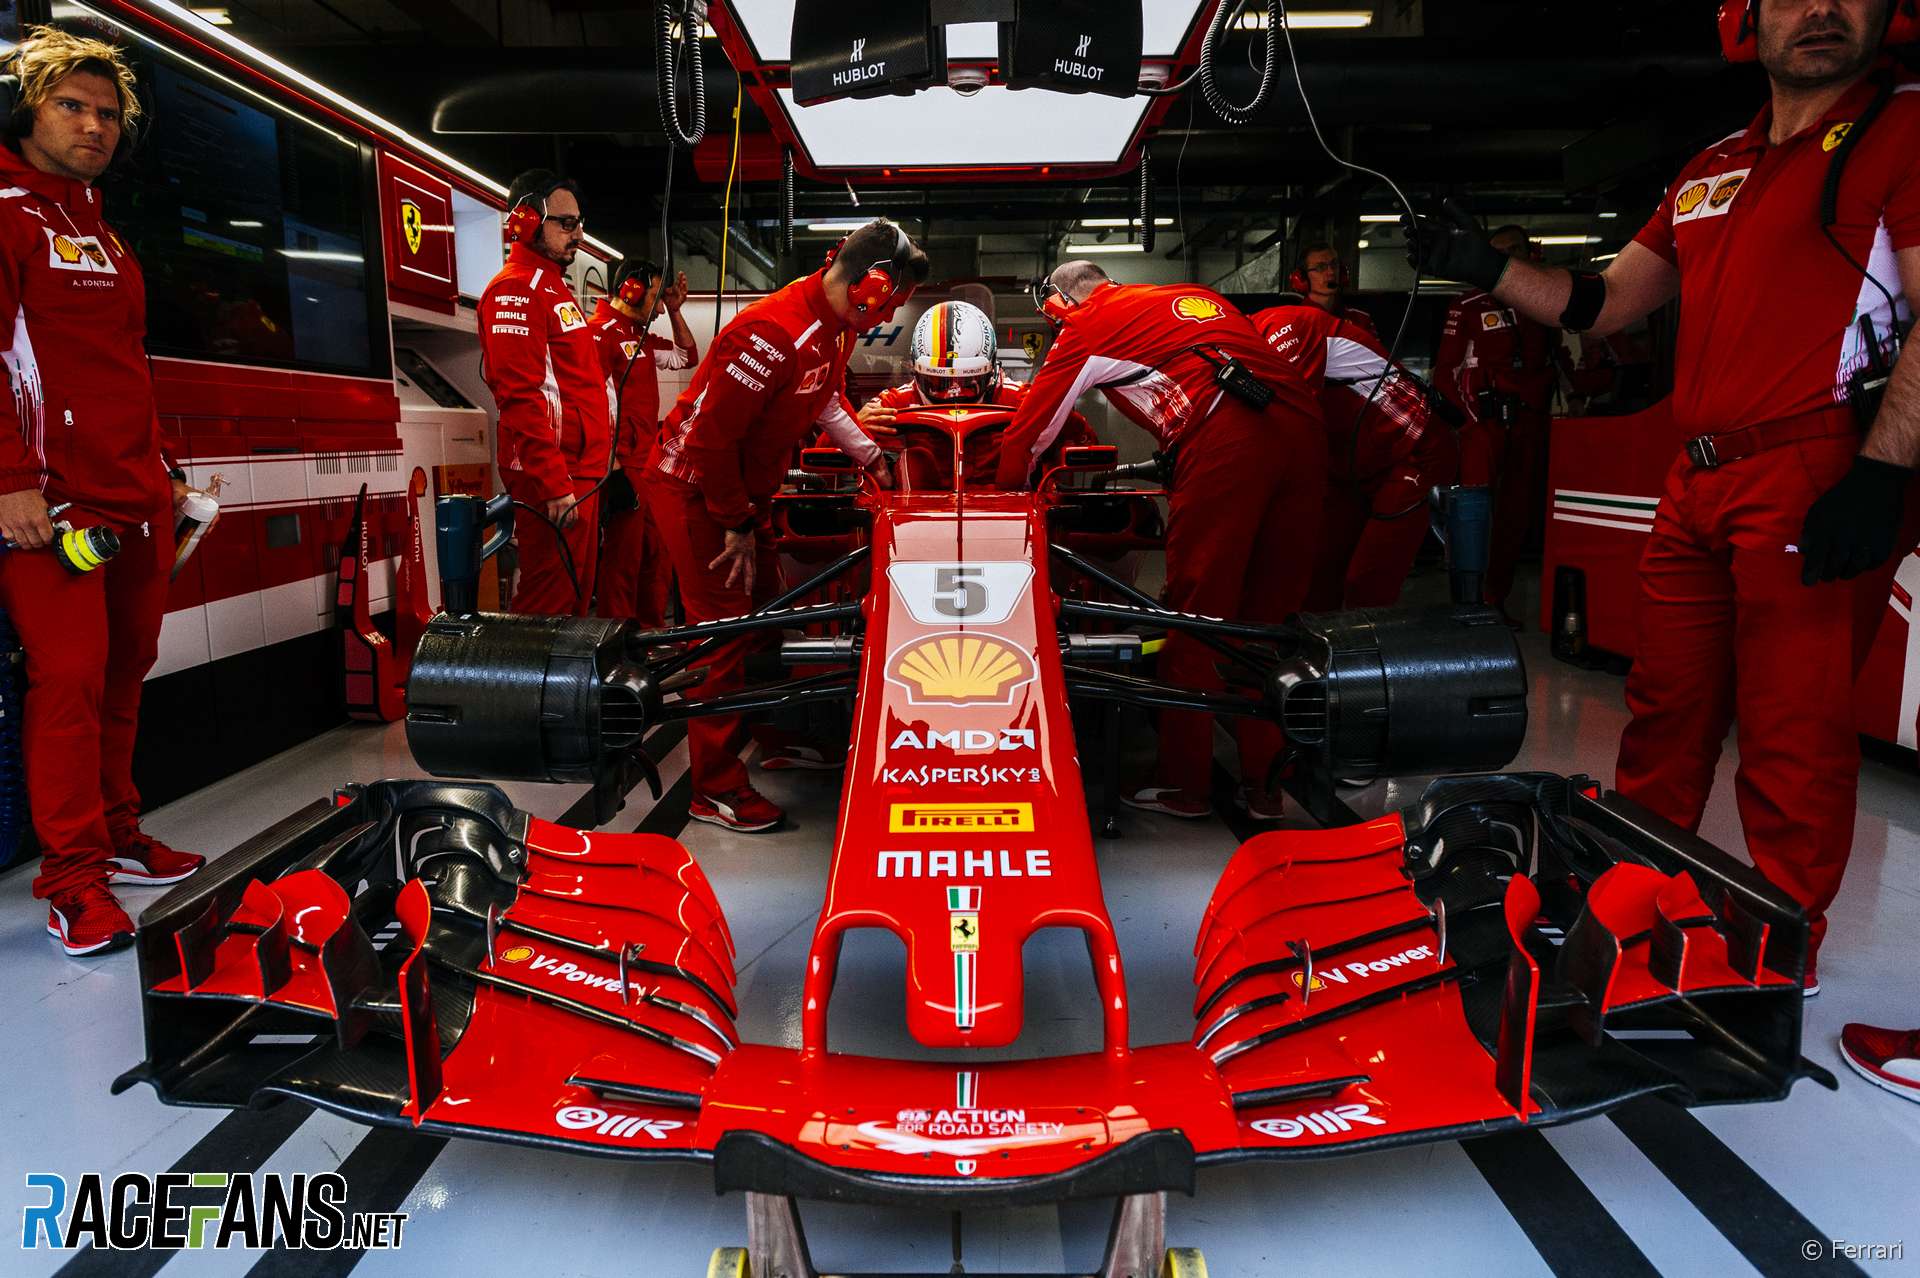 Sebastian Vettel, Ferrari, Shanghai International Circuit, 2018